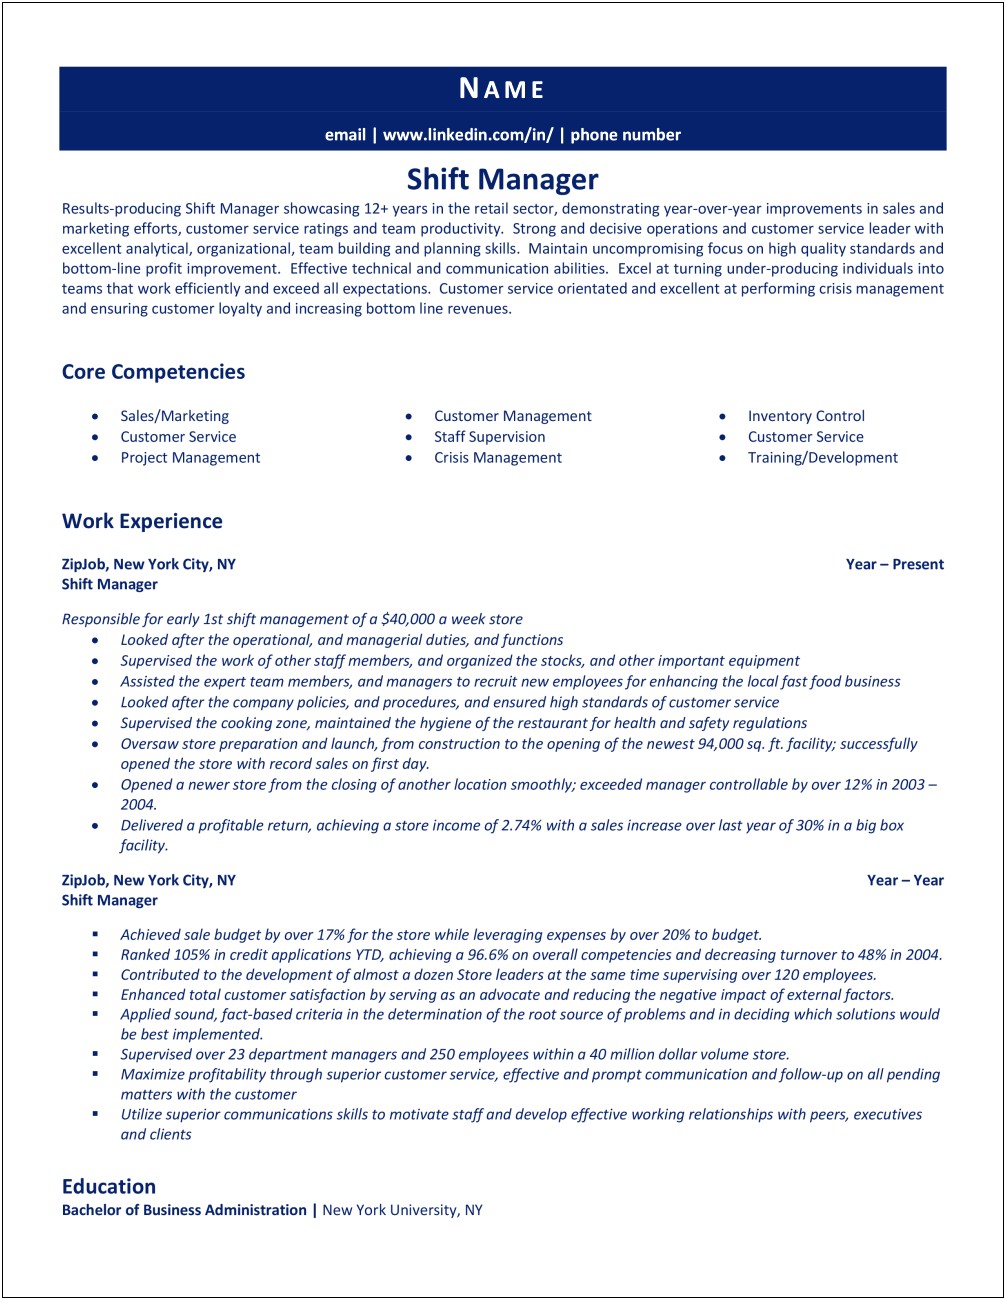 Bullet Points On Resume For Shift Manager